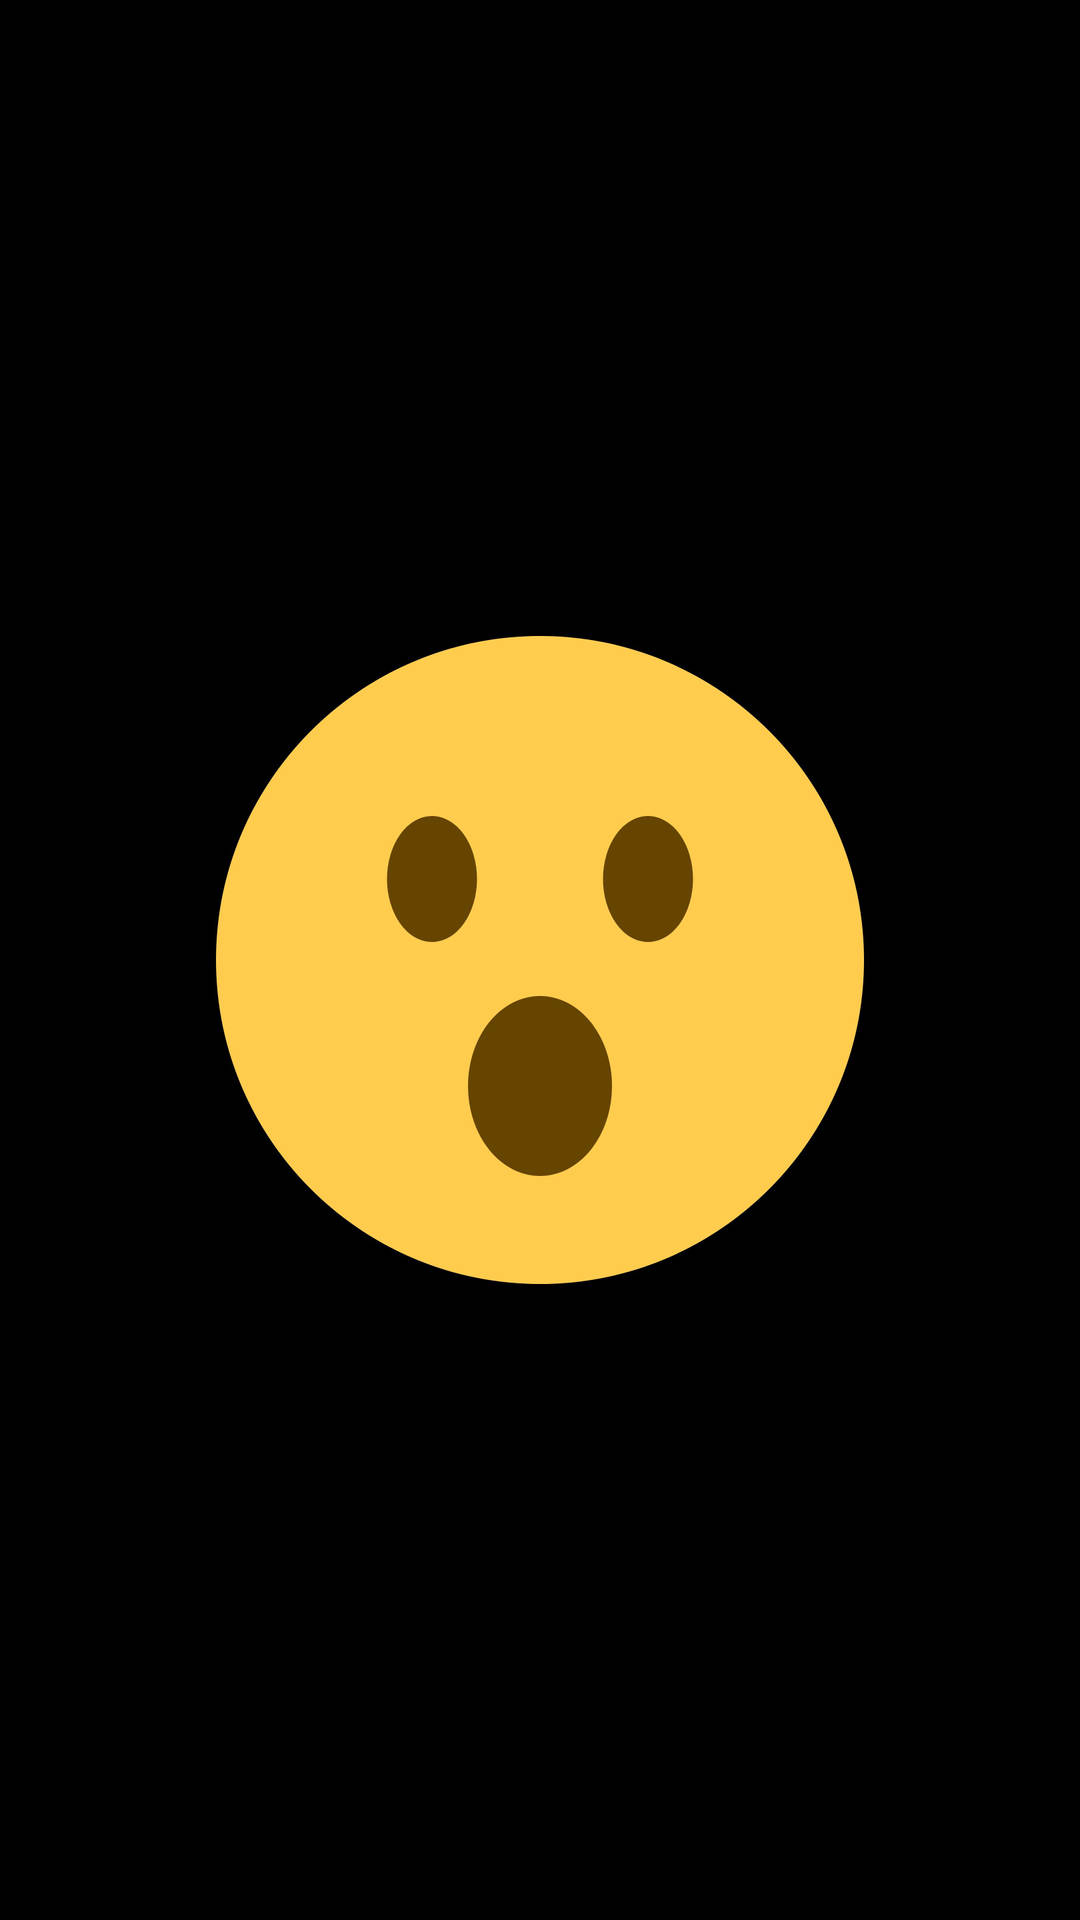 Download Emoji Wallpaper